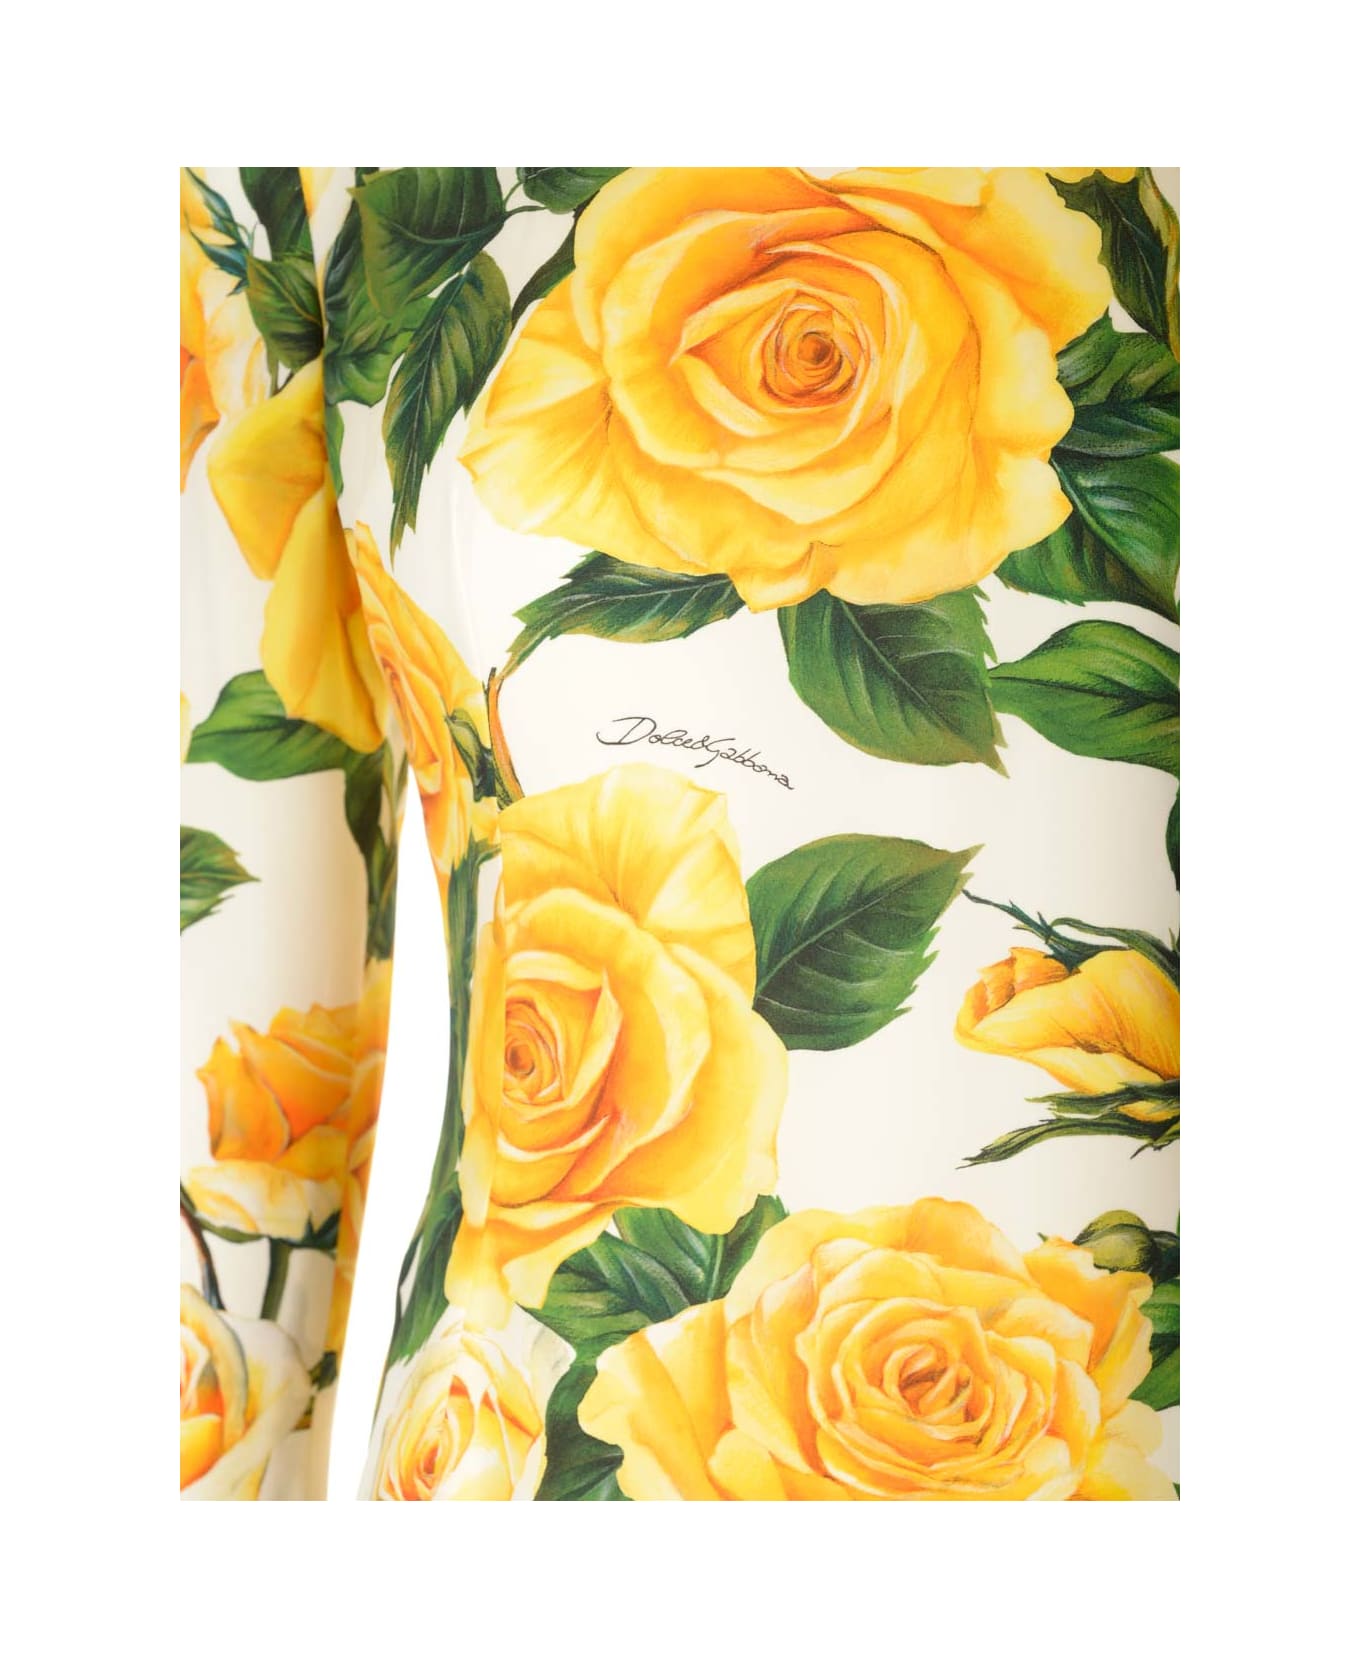 Dolce & Gabbana Yellow Roses Printed Midi Dress